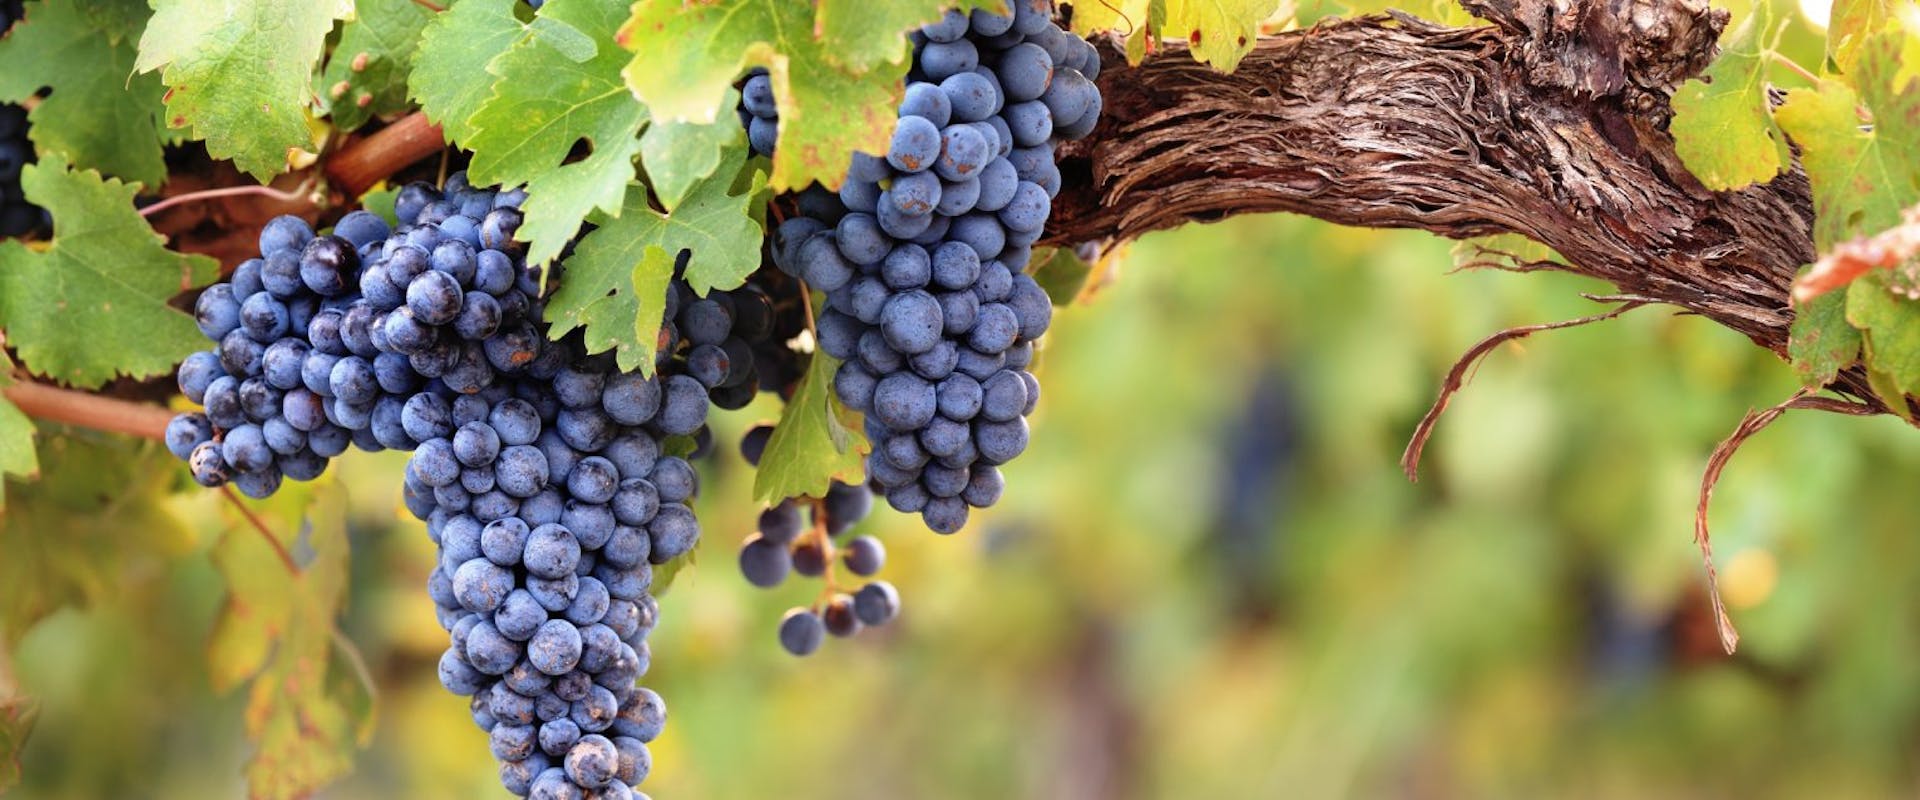 A grape vine with grapes.